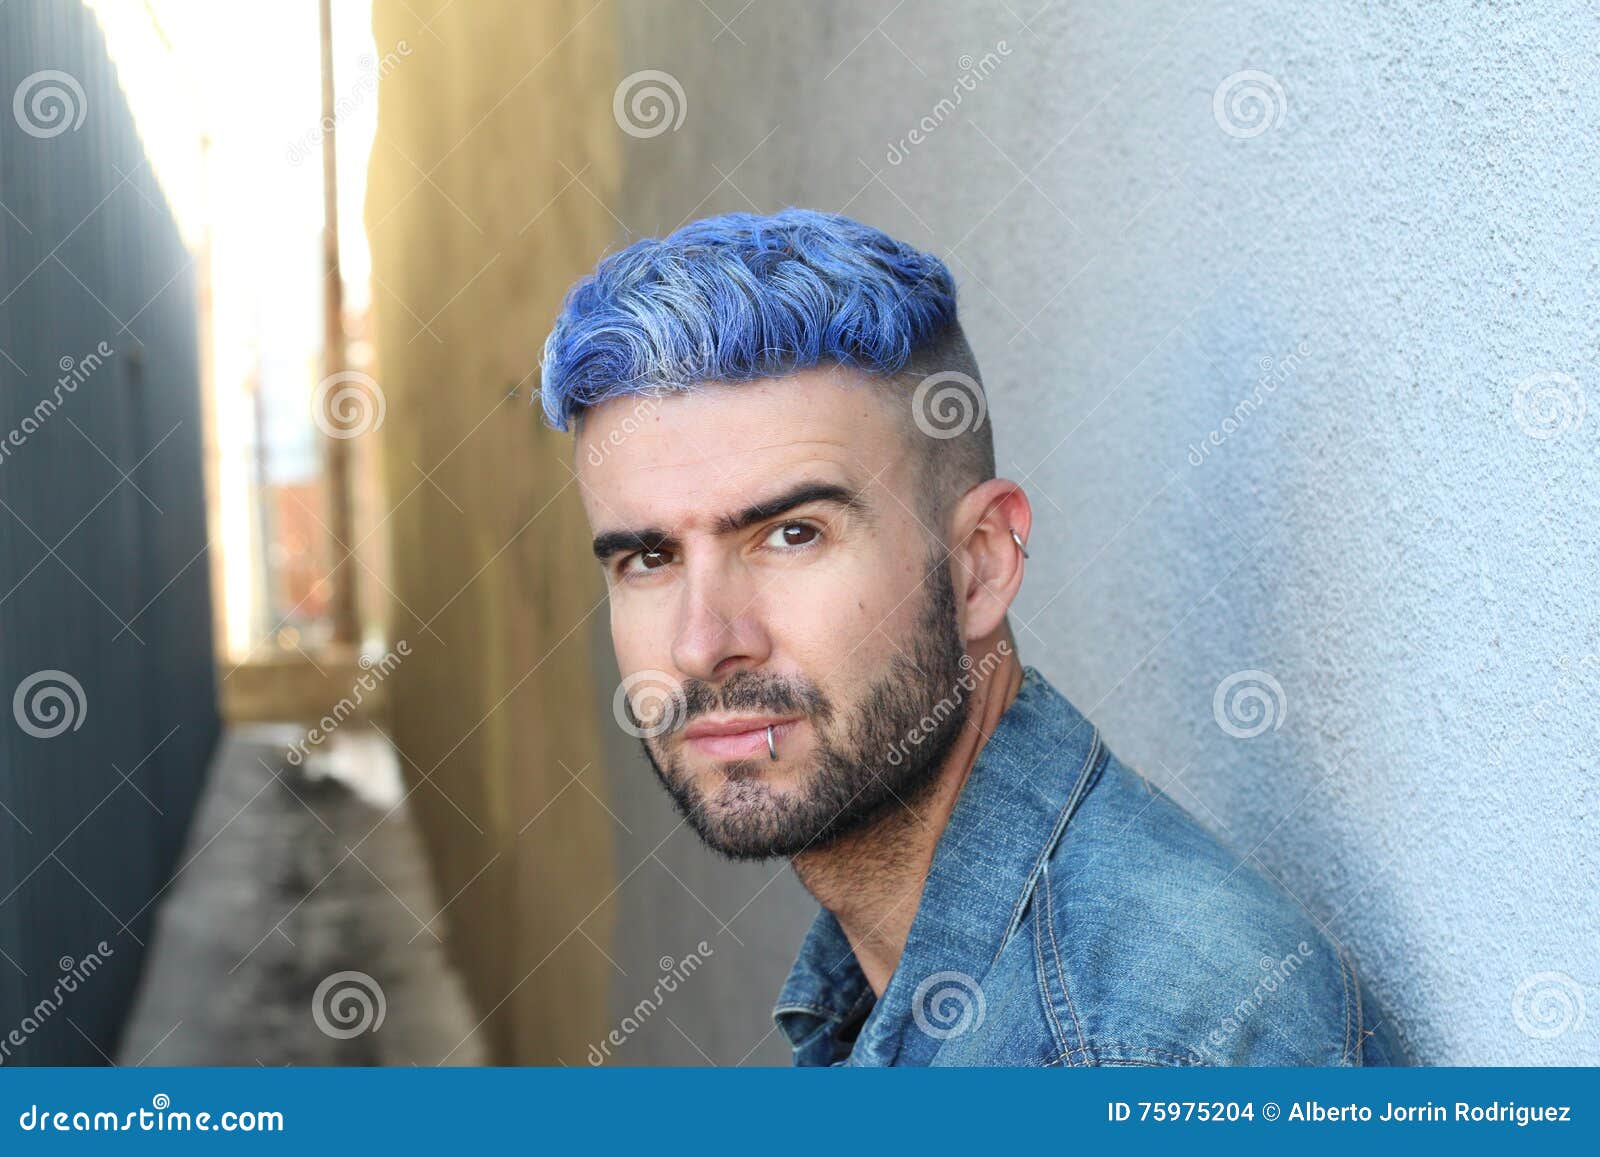 Blue-haired senior man - wide 4